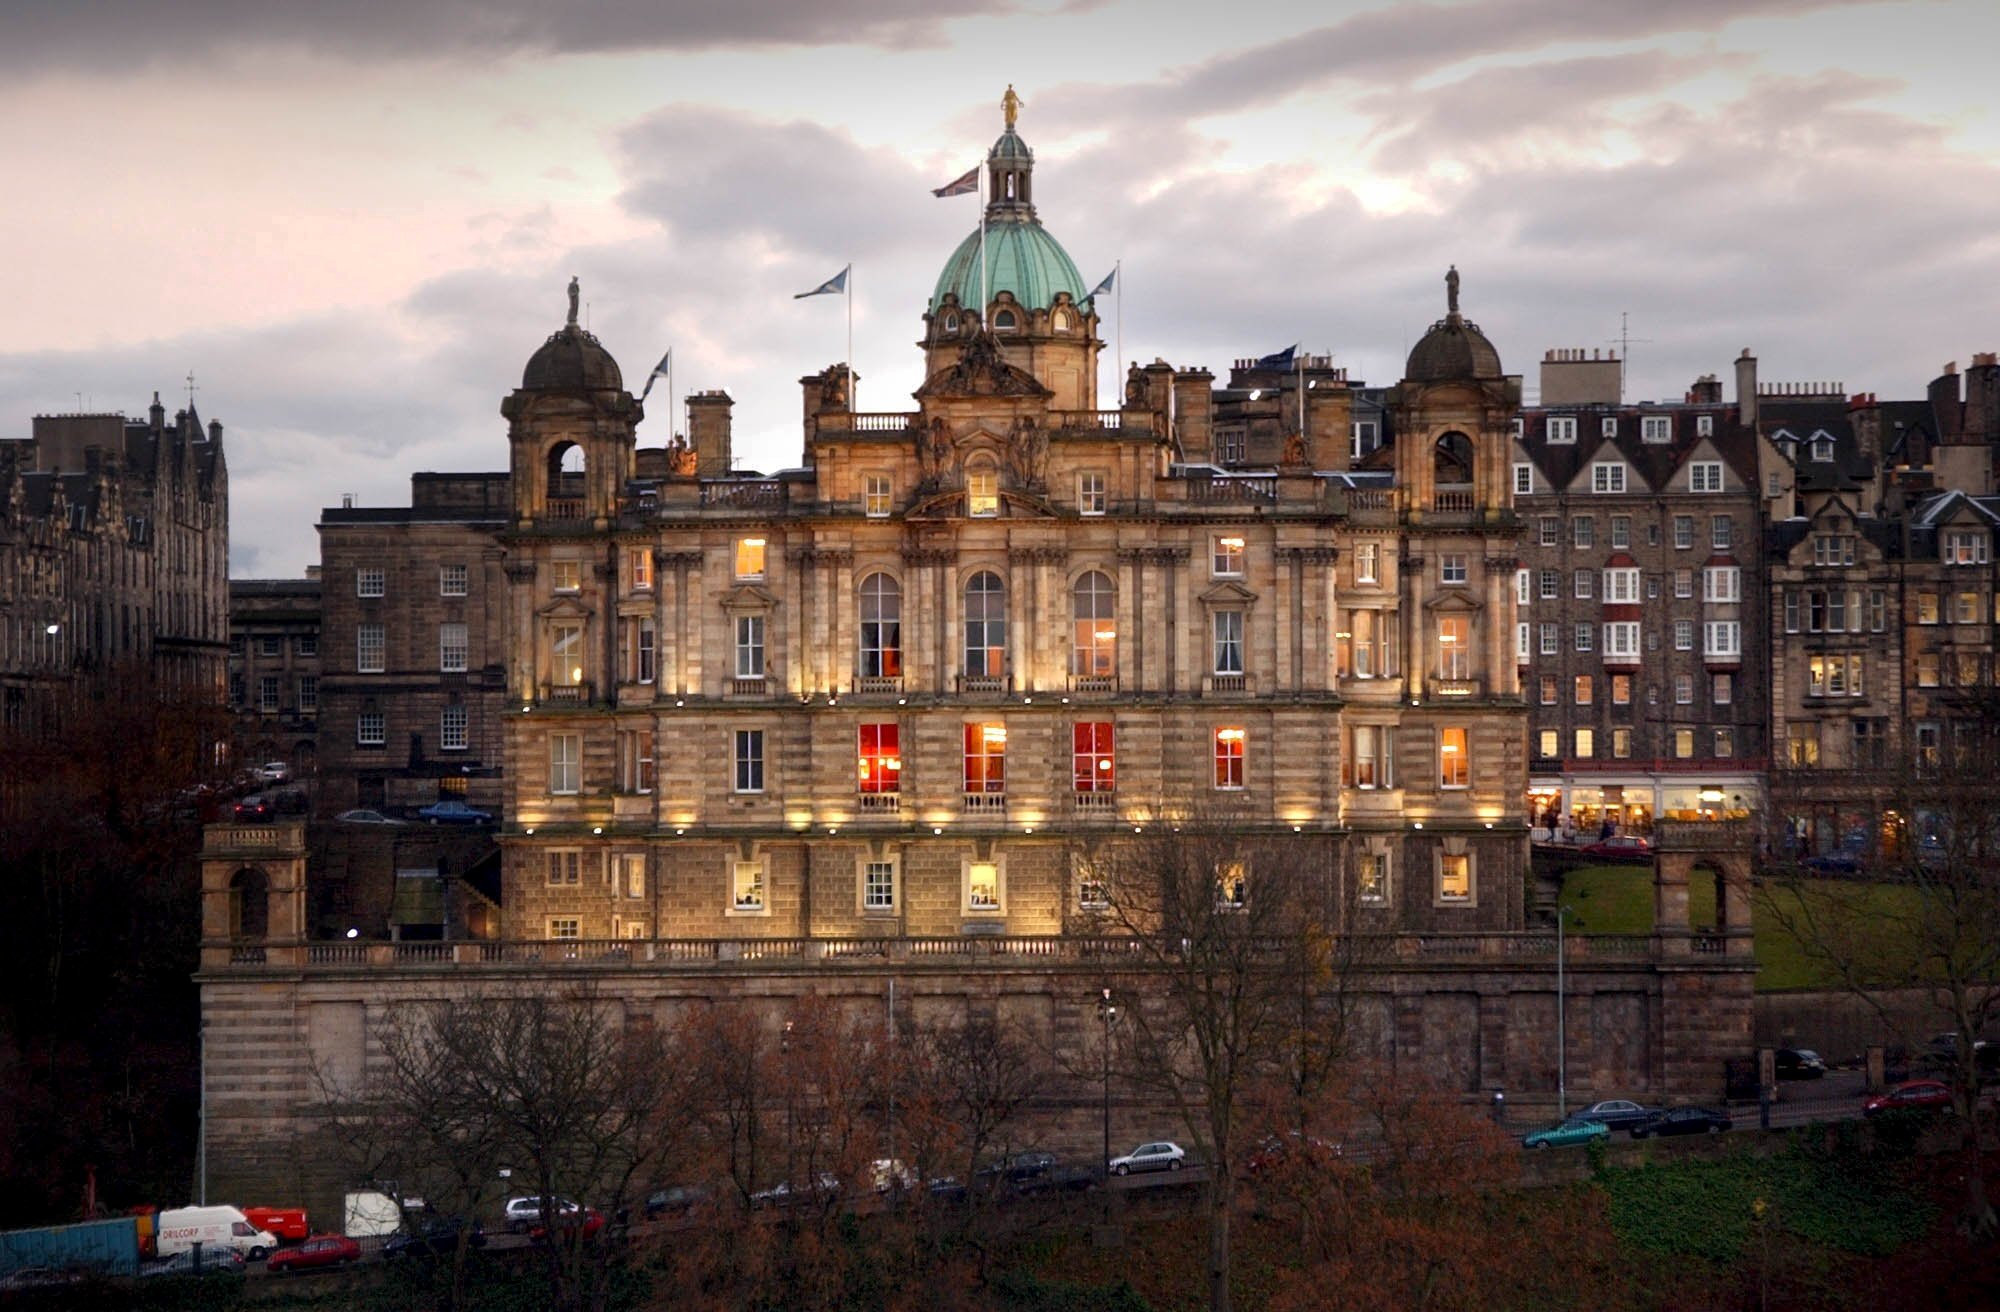 Edinburgh banks: Sad ghost tour of Scotland’s former seats of real power: Ian McConnell